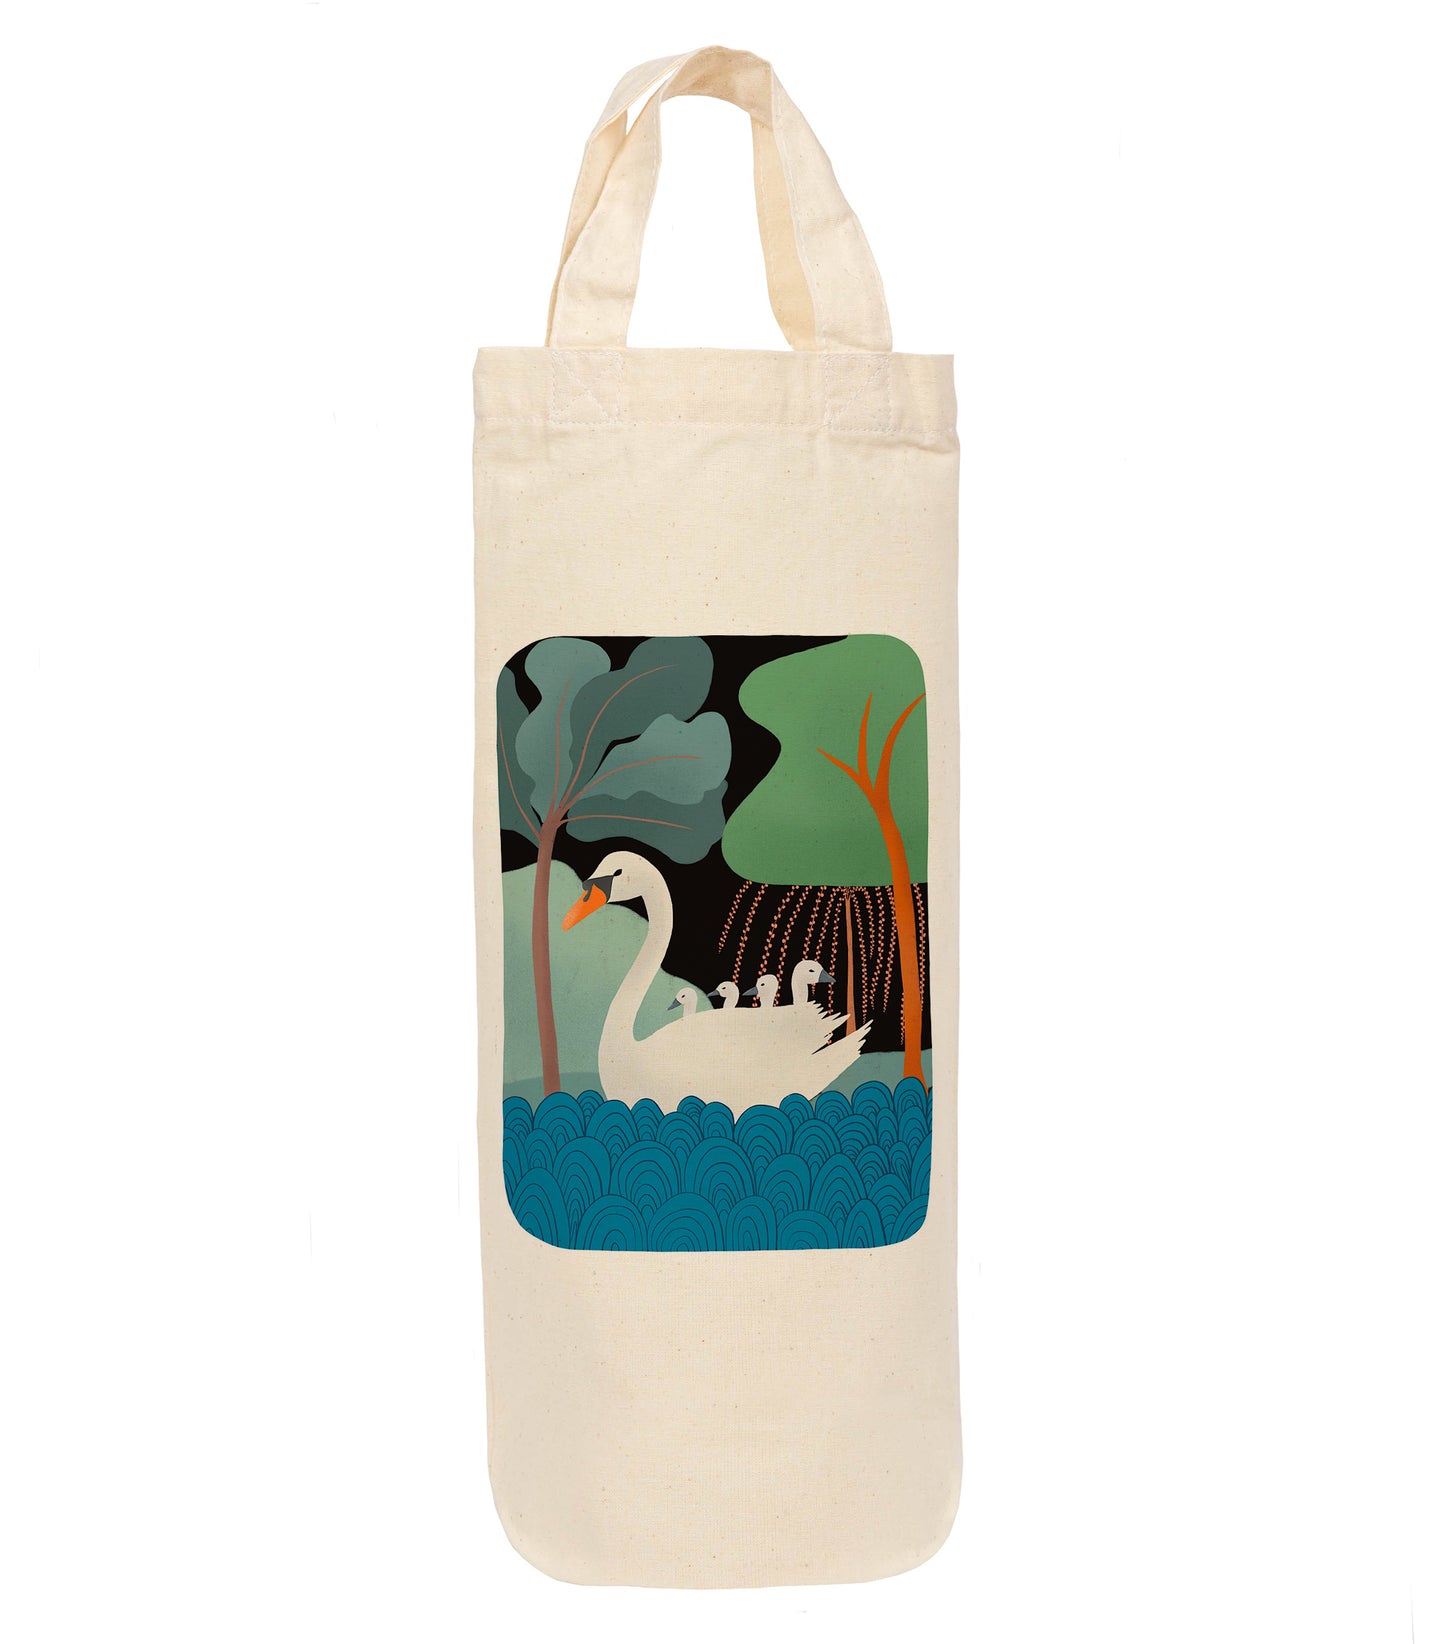 Swan and cygnets bottle bag - wine tote - gift bag